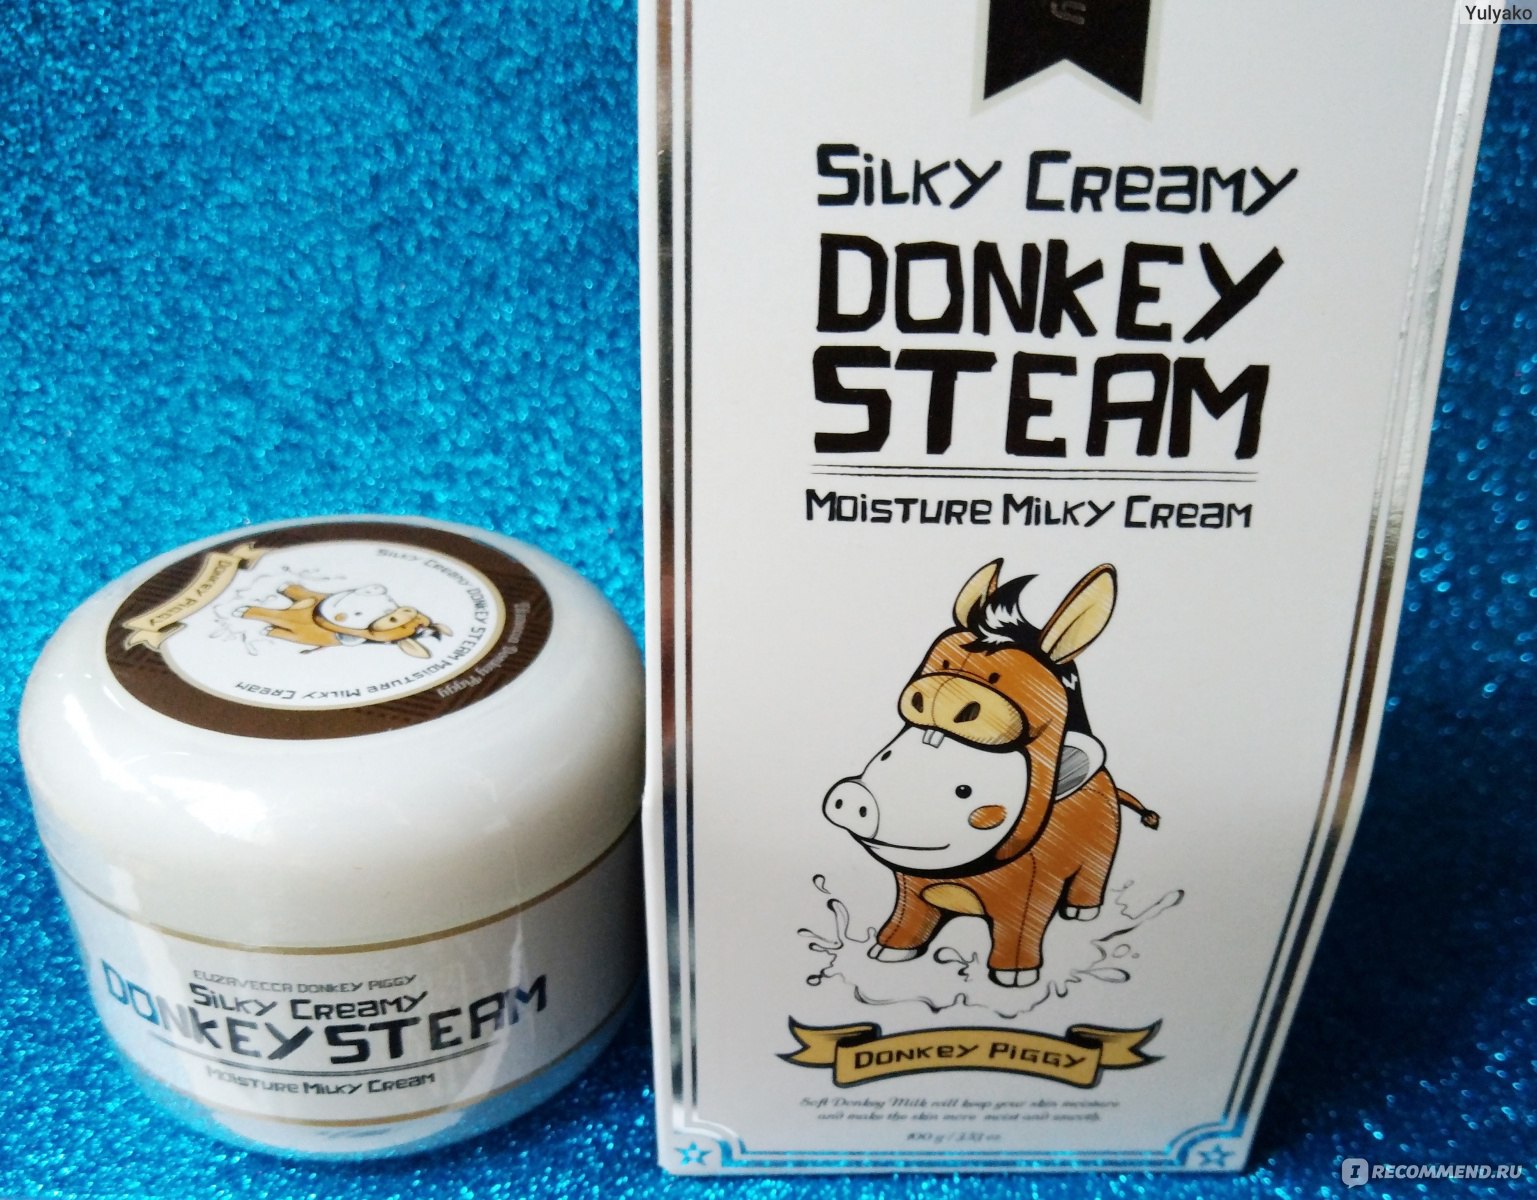 Silky creamy donkey steam moisture milky cream крем фото 32